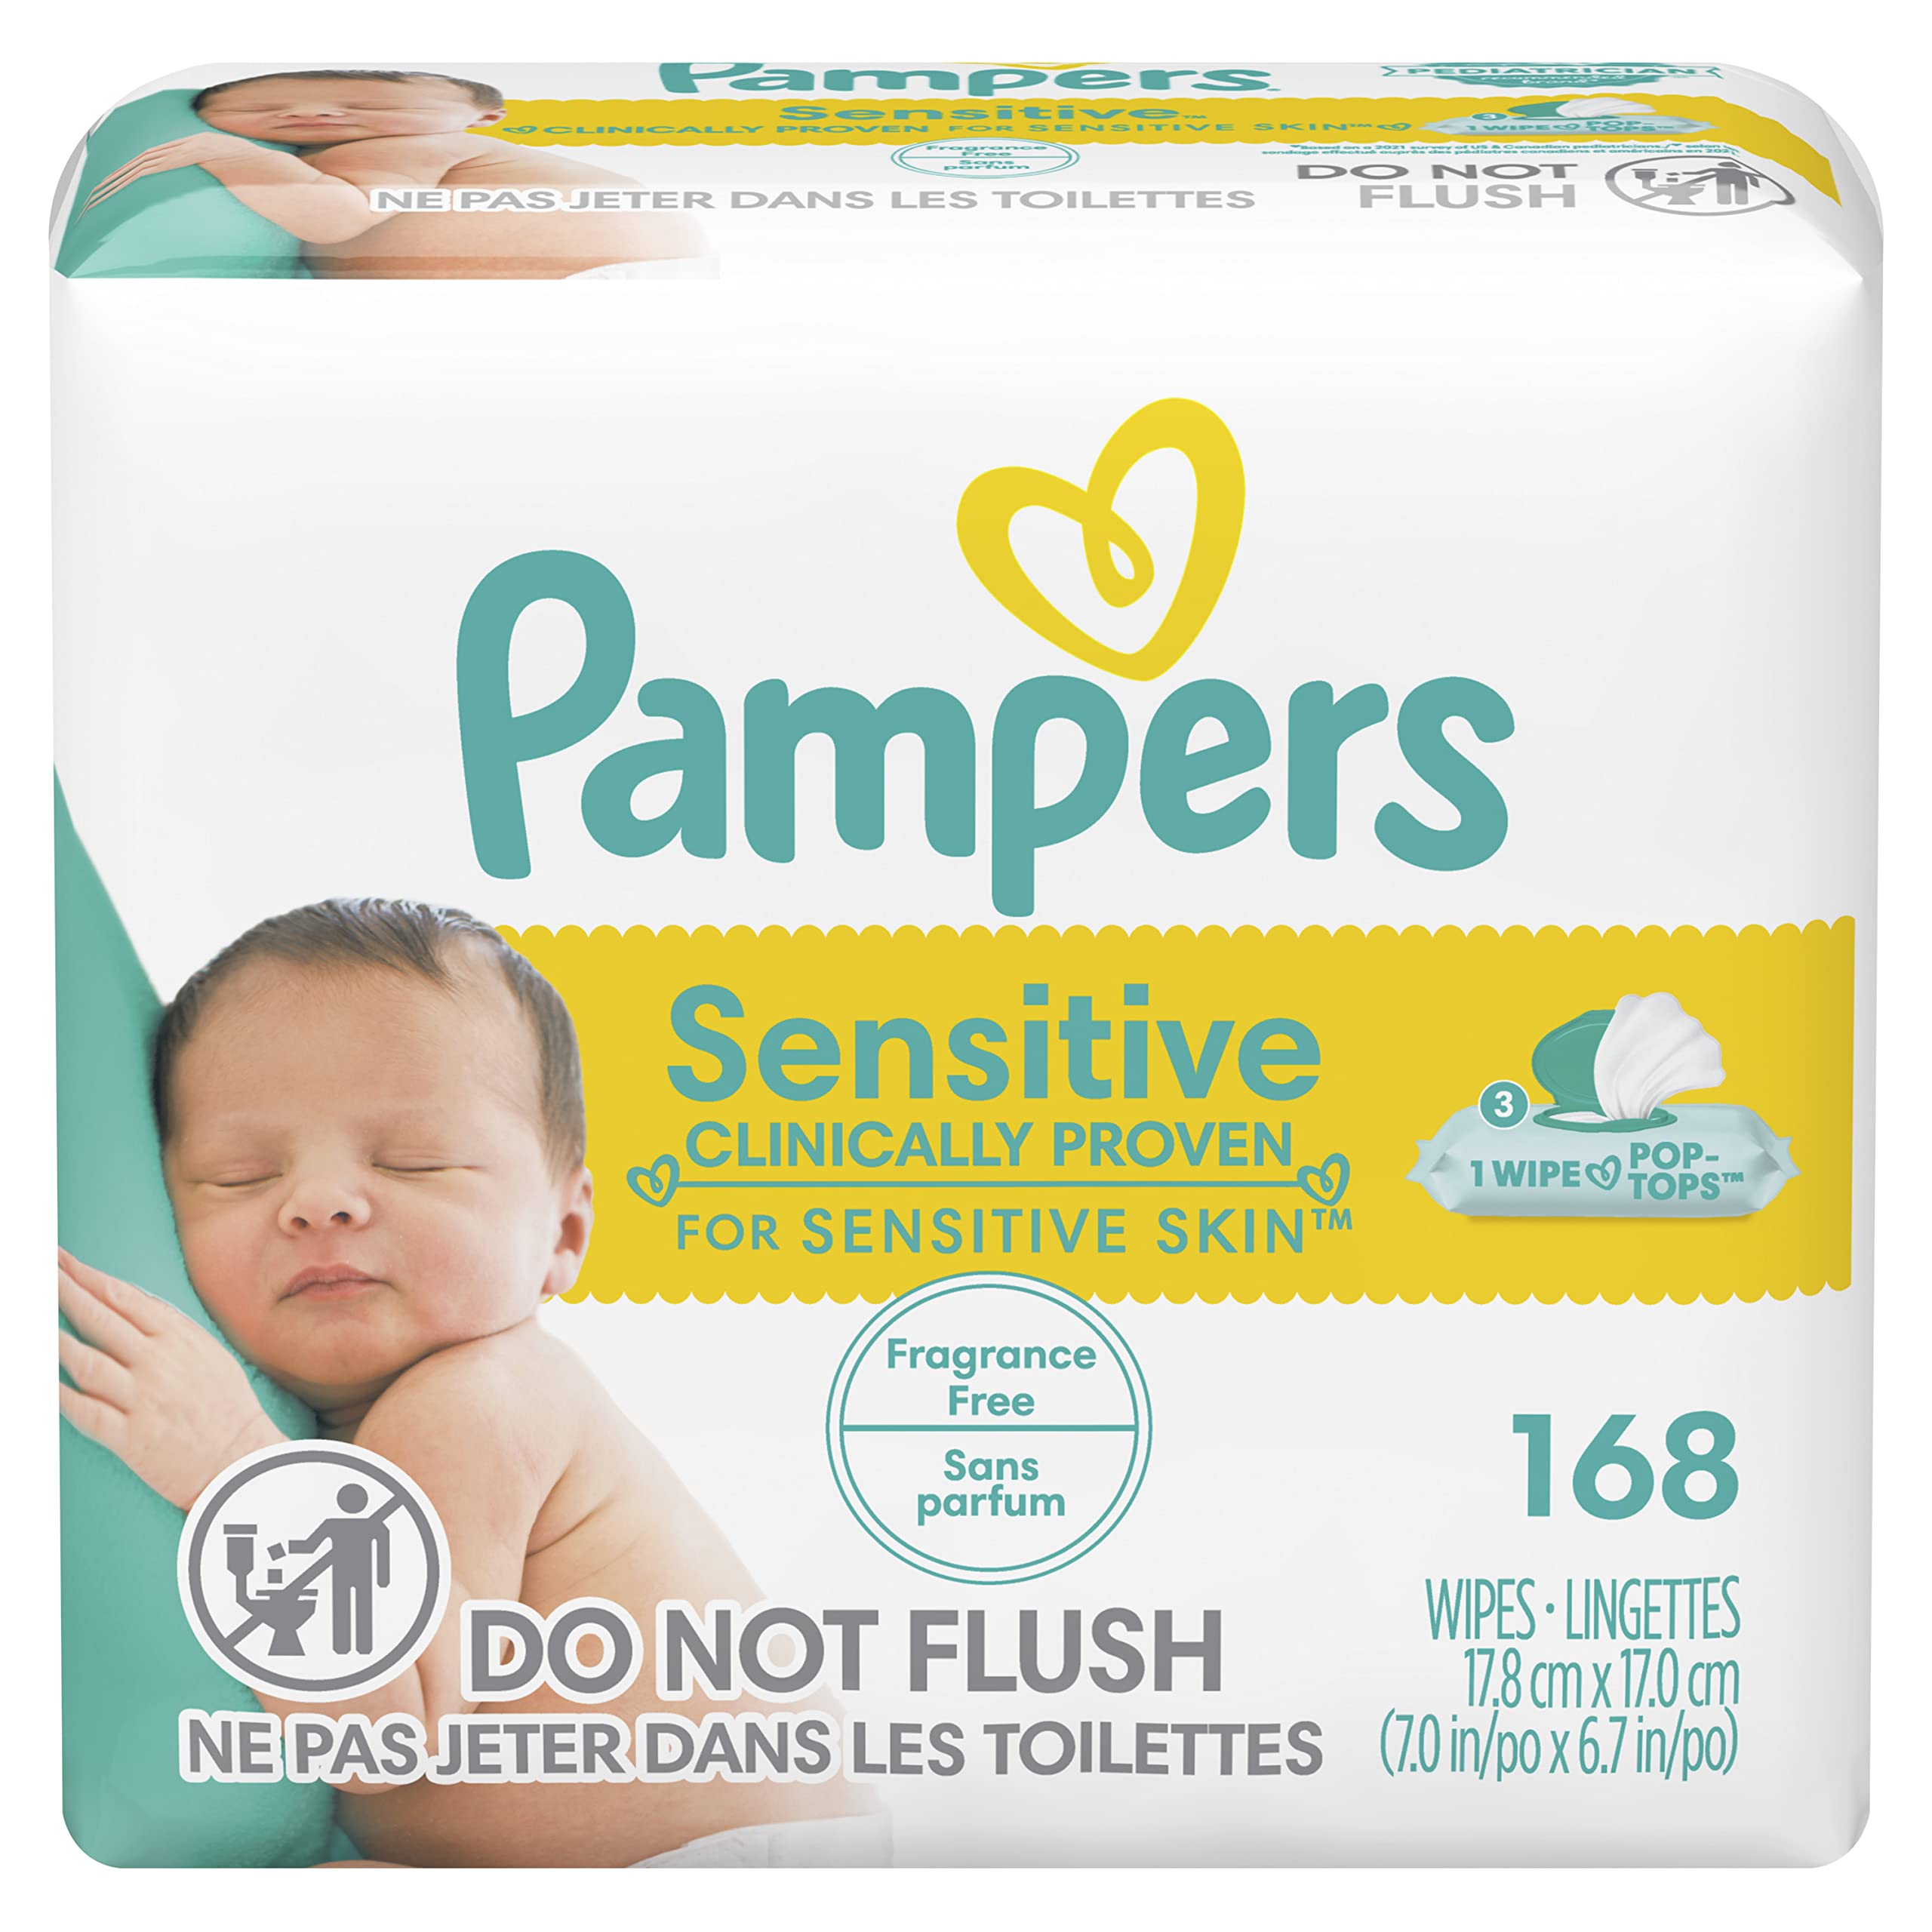 pampers premium newborn 2